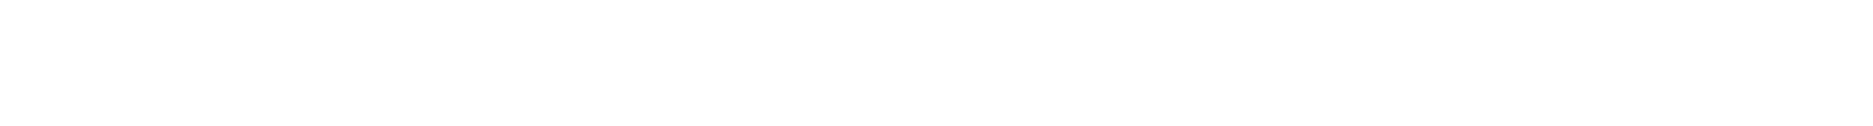 reset-com.de – Neuer Start. Neue Zukunft. Logo